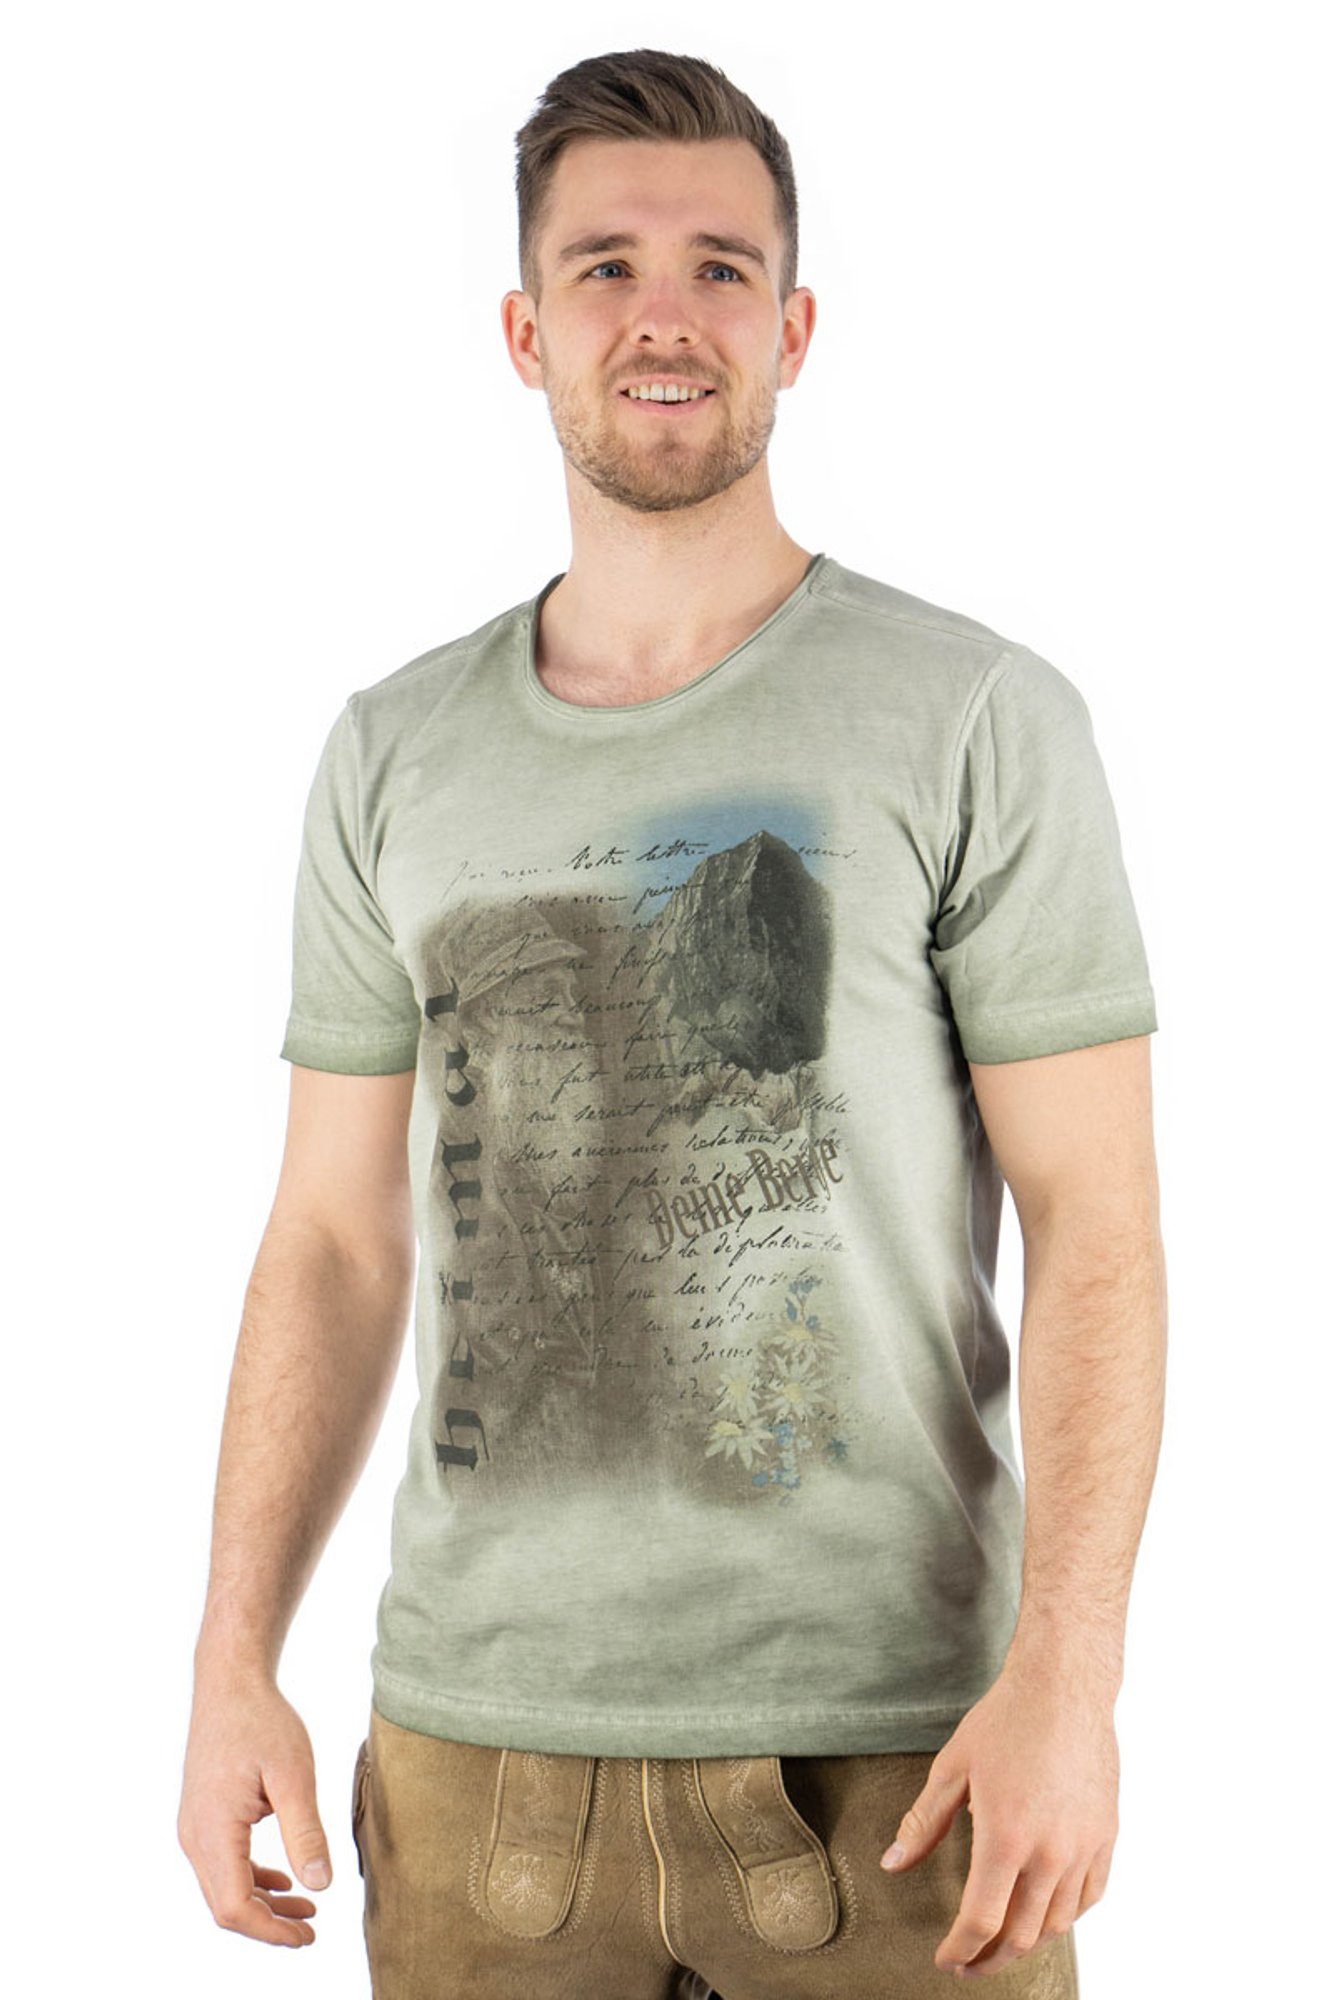 Kurzarm Motivdruck khaki/schlamm mit Trachtenshirt OS-Trachten Praiol T-Shirt